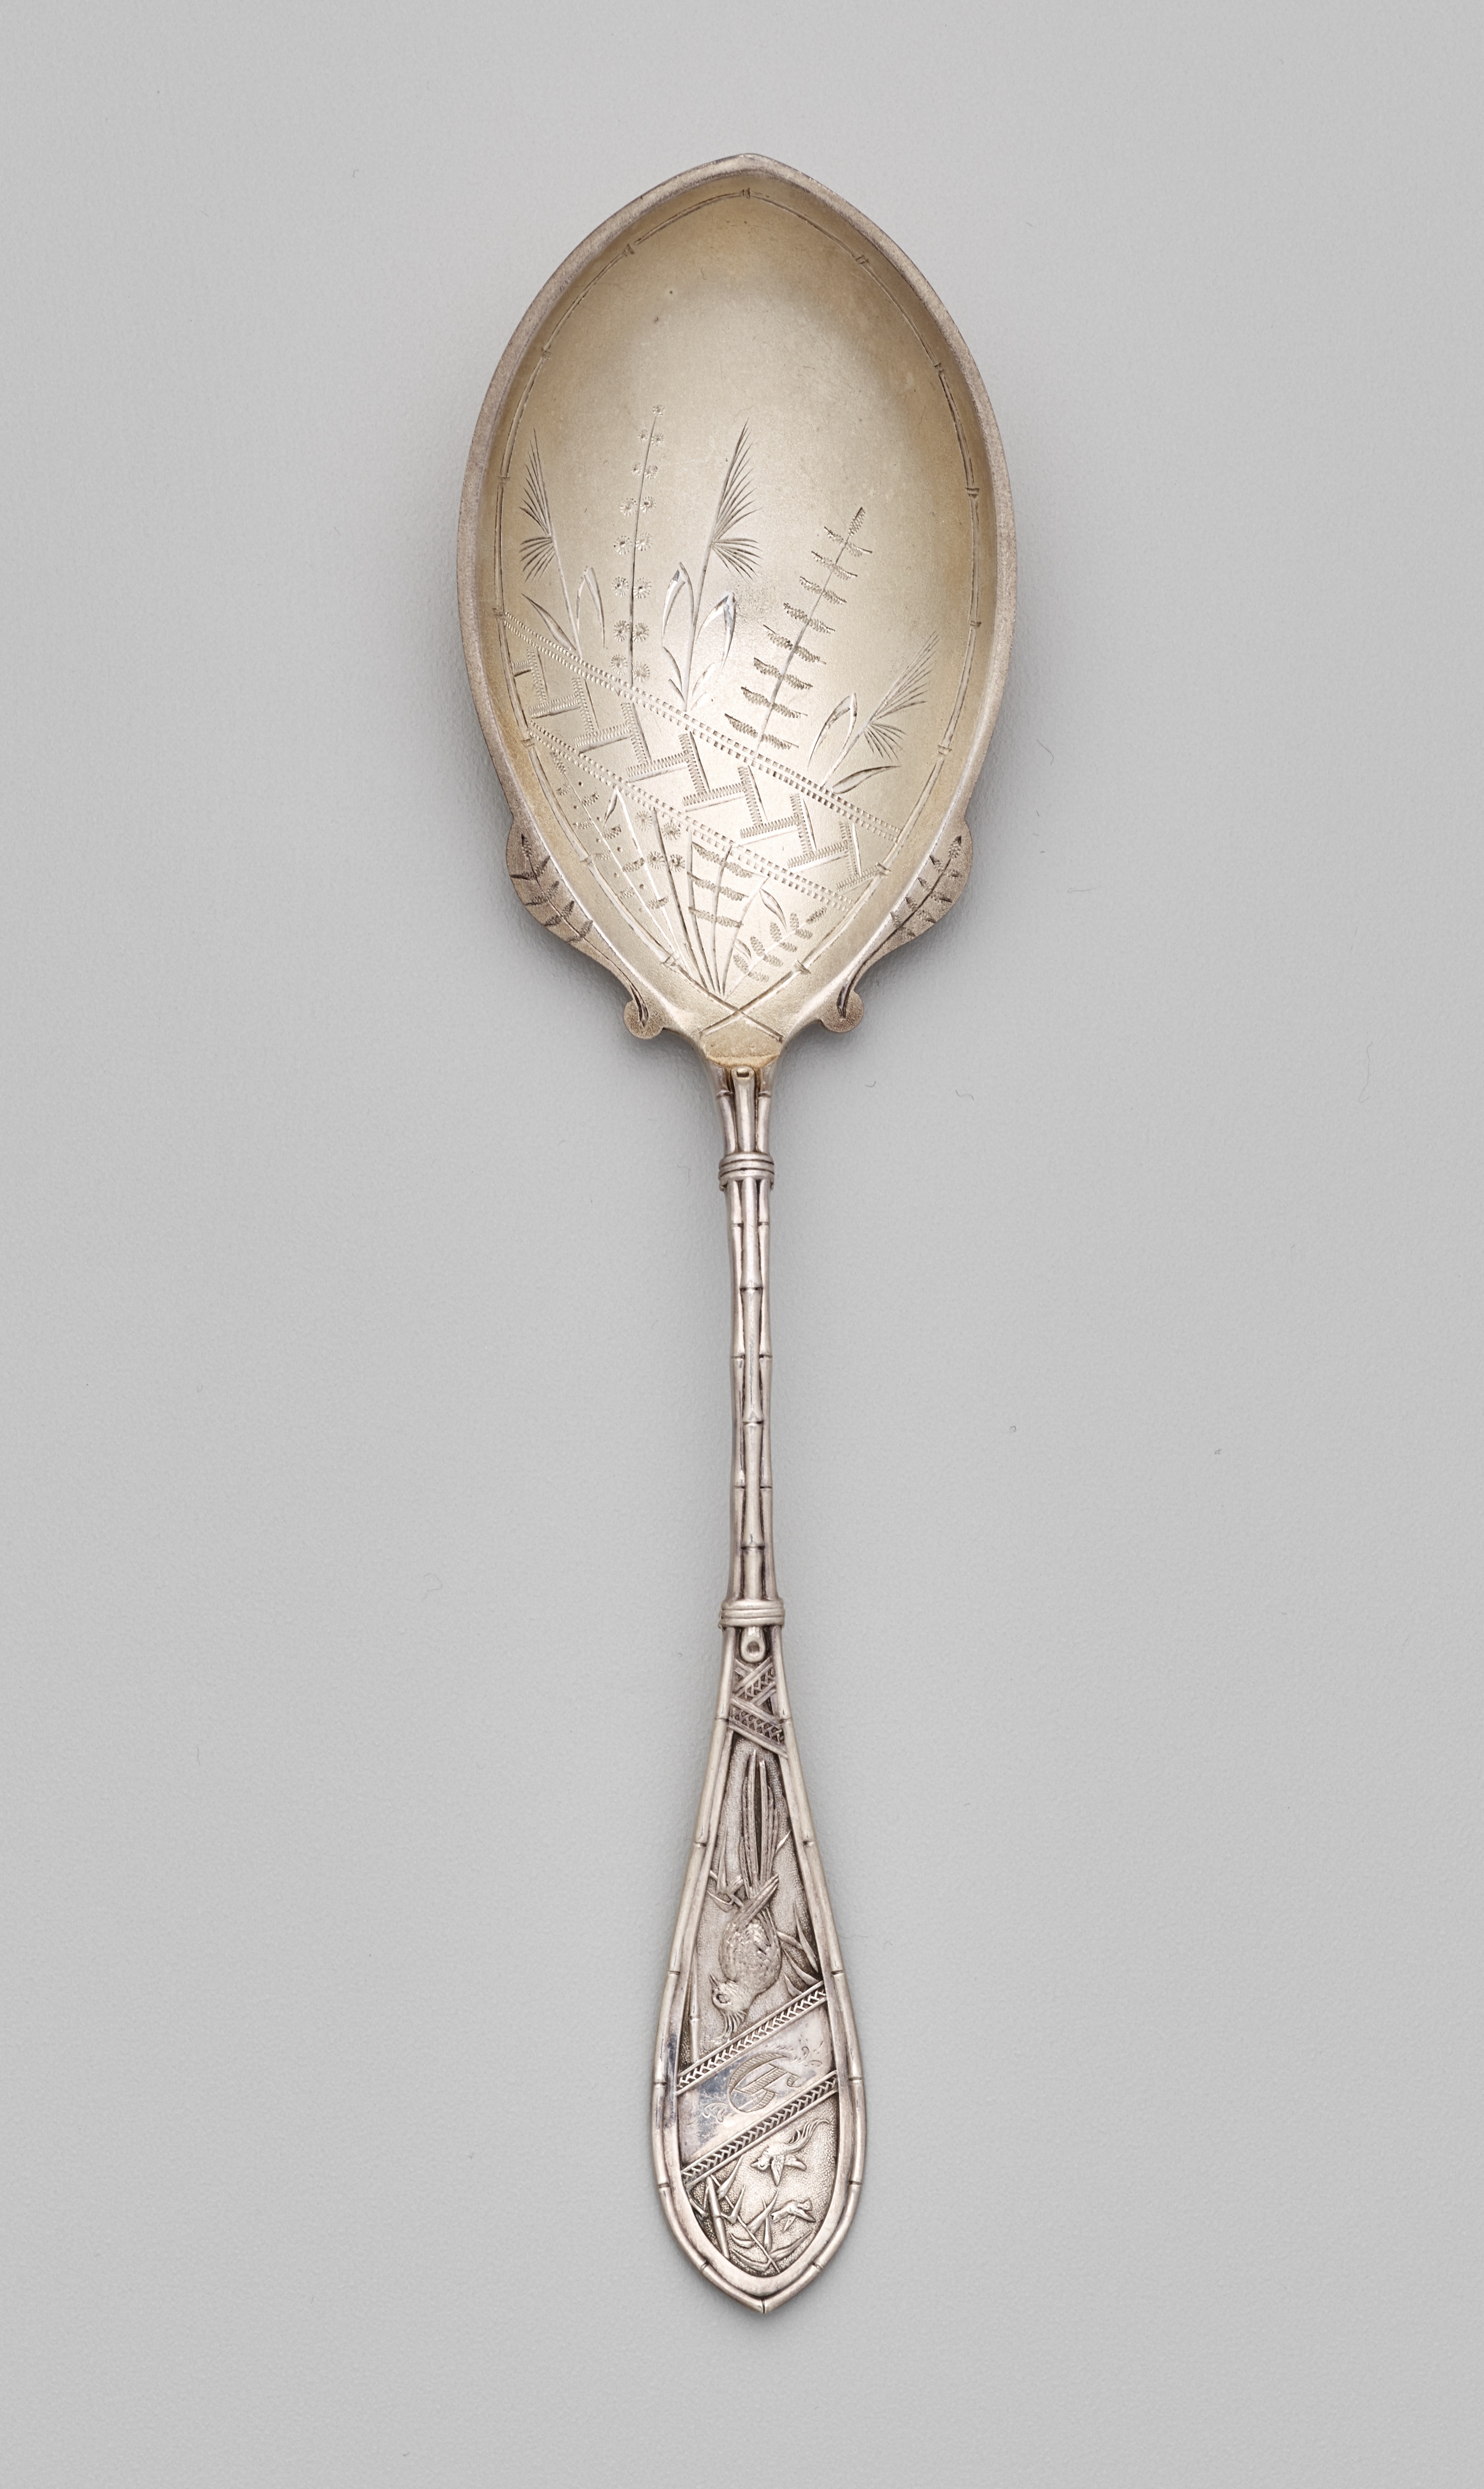 Silver spoon - Wikipedia